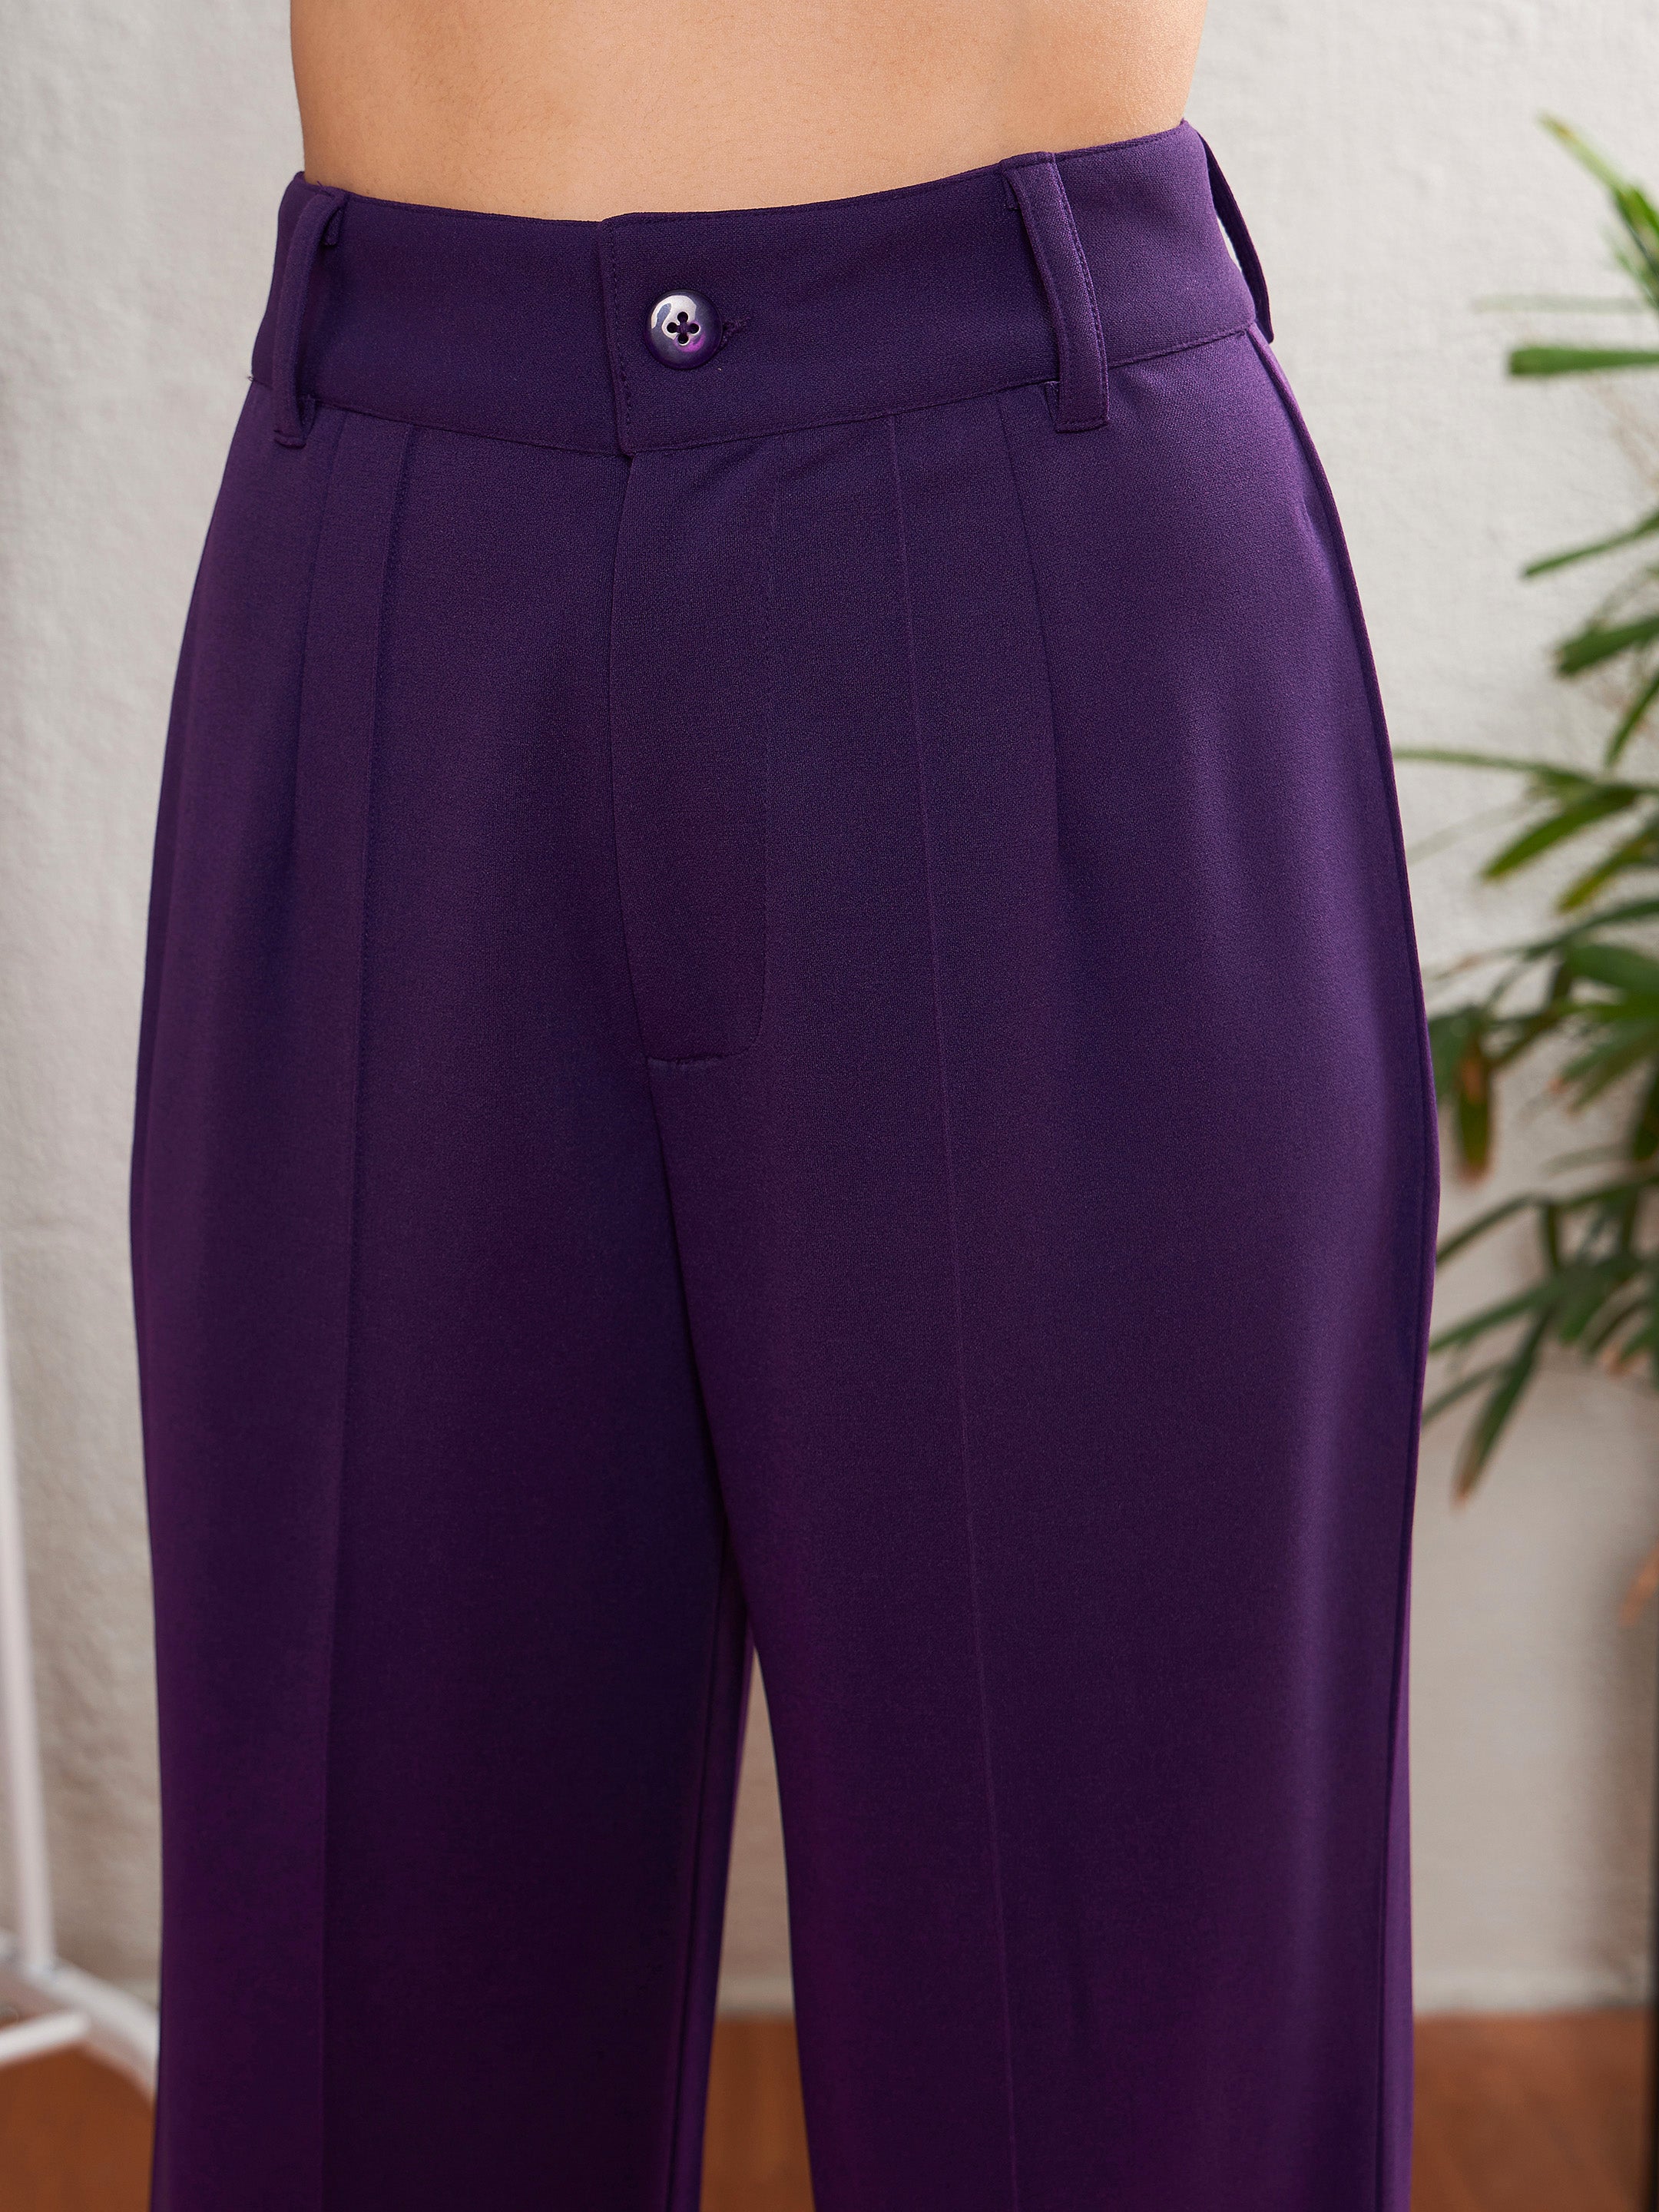 Women's Purple Longline Blazer With Darted Pants - SASSAFRAS